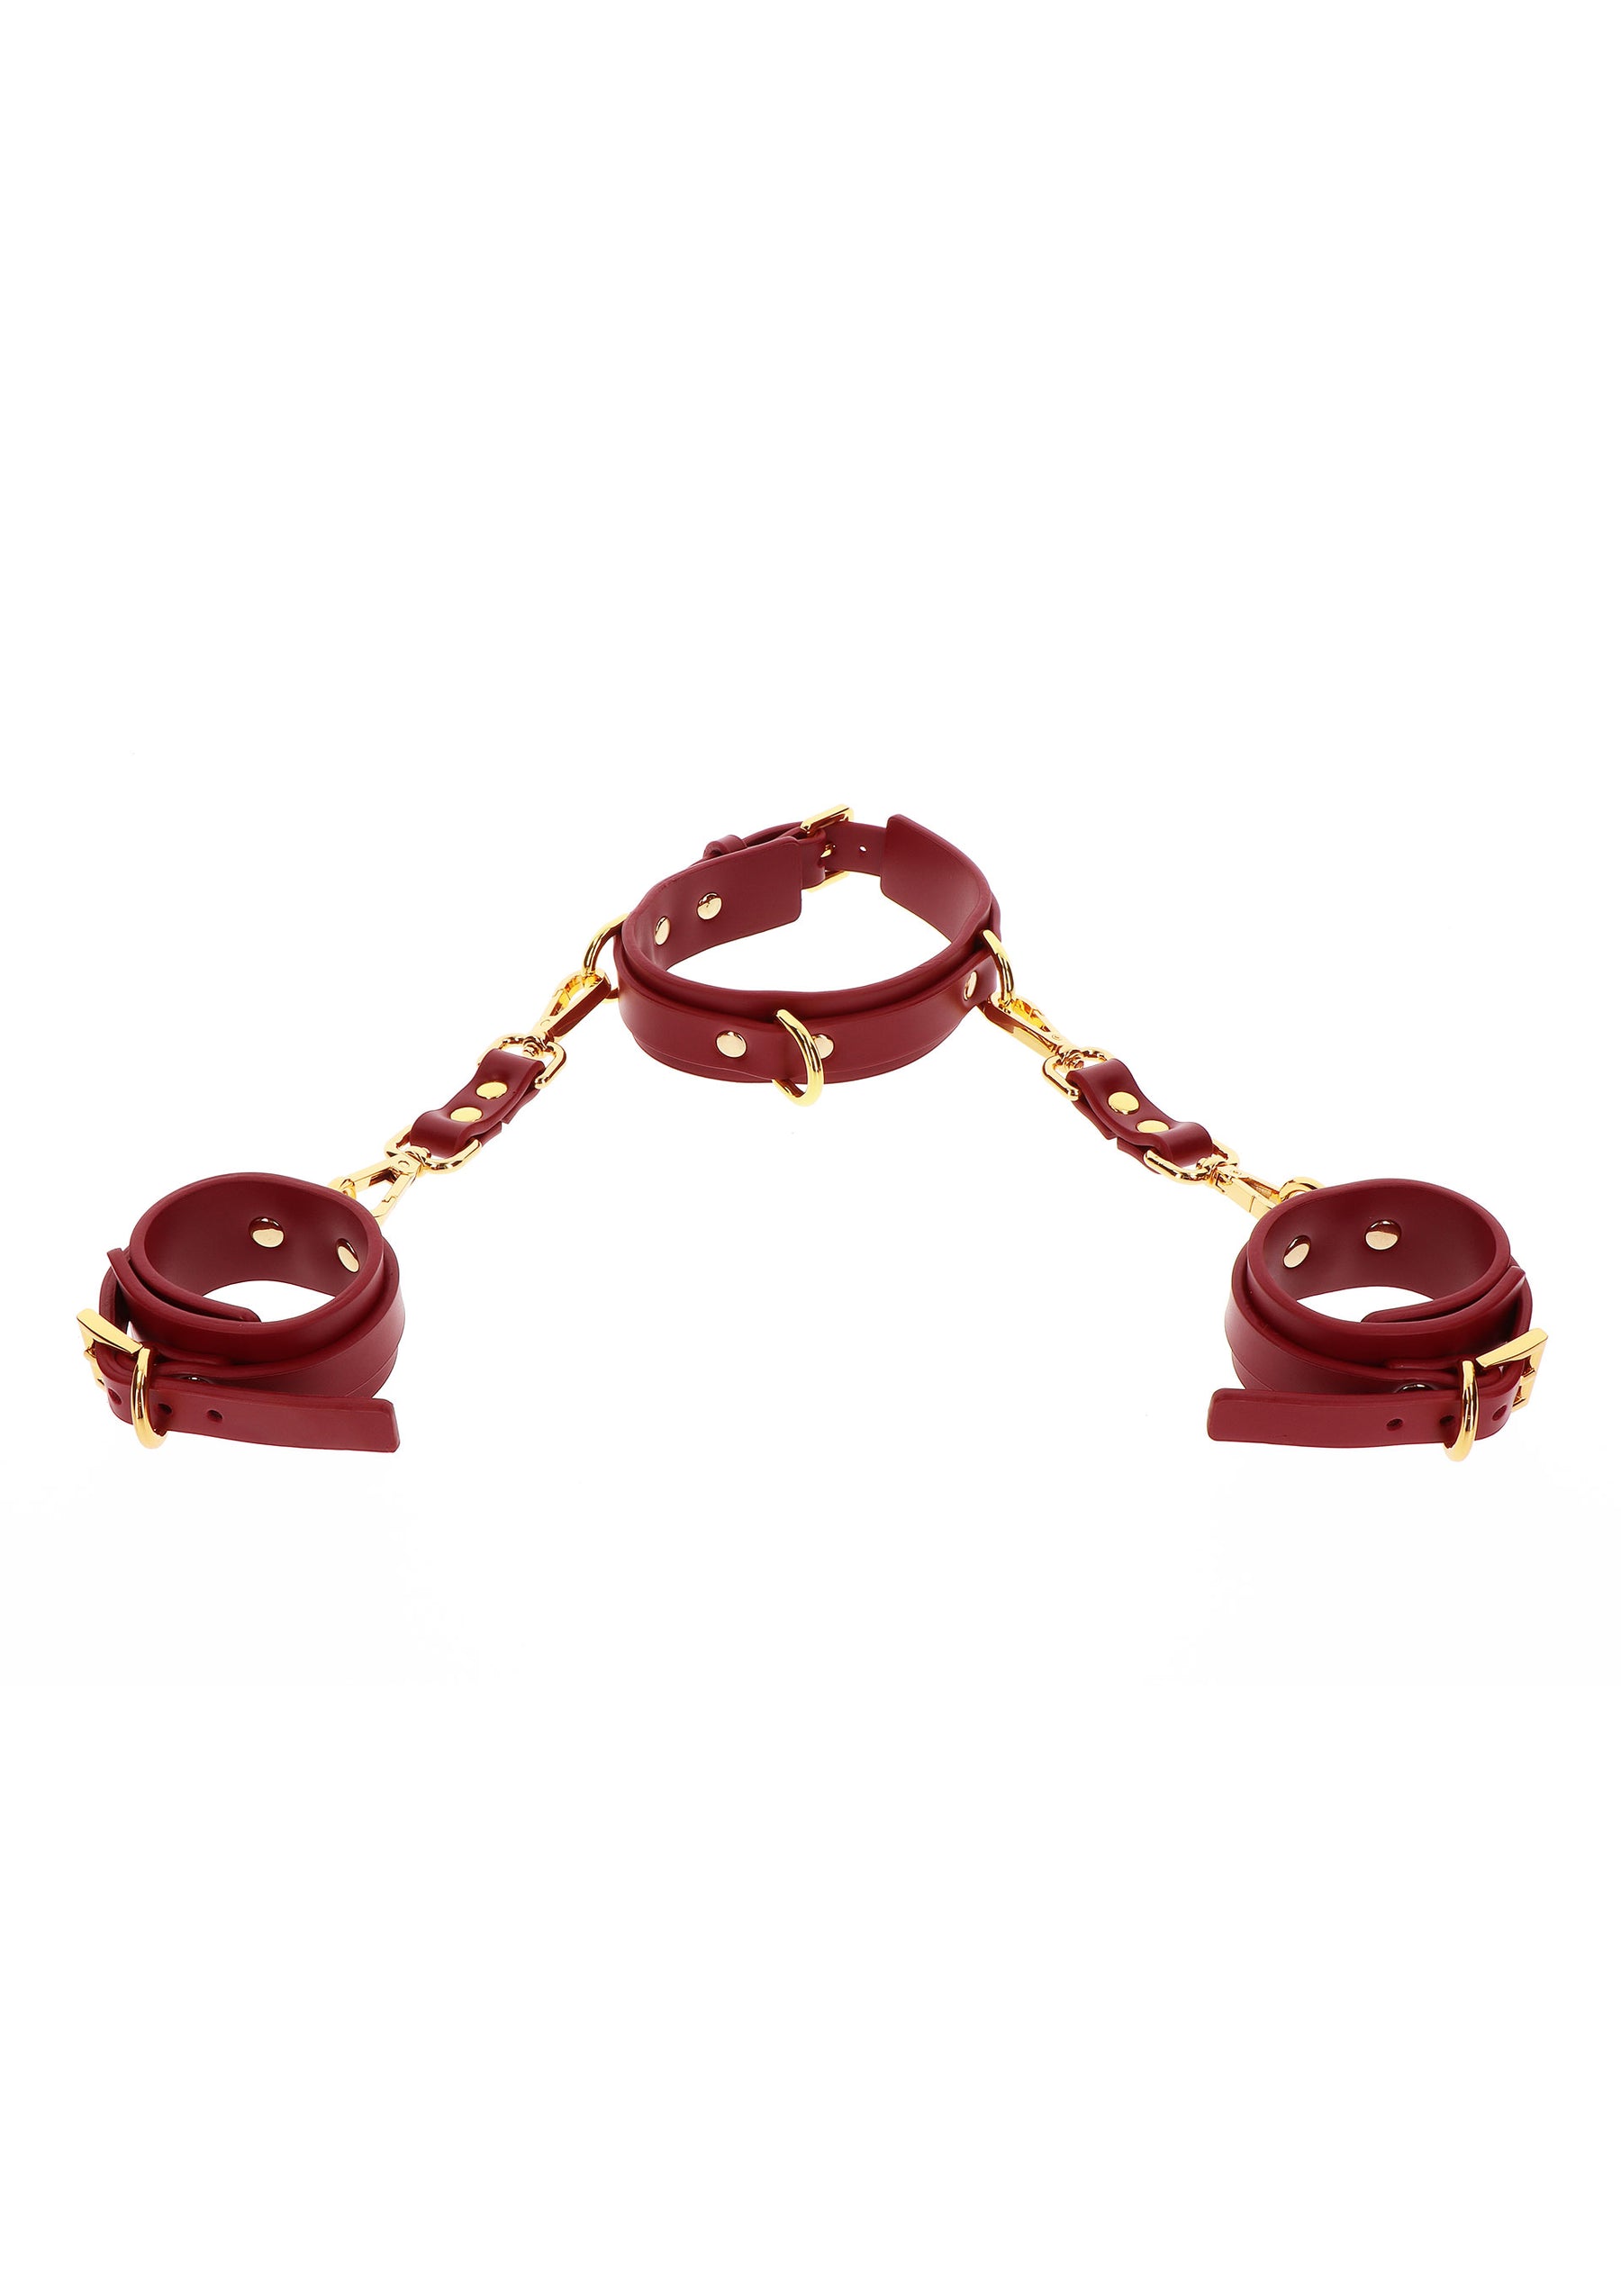 D-Ring Collar and Wrist Cuffs-erotic-world-munchen.myshopify.com